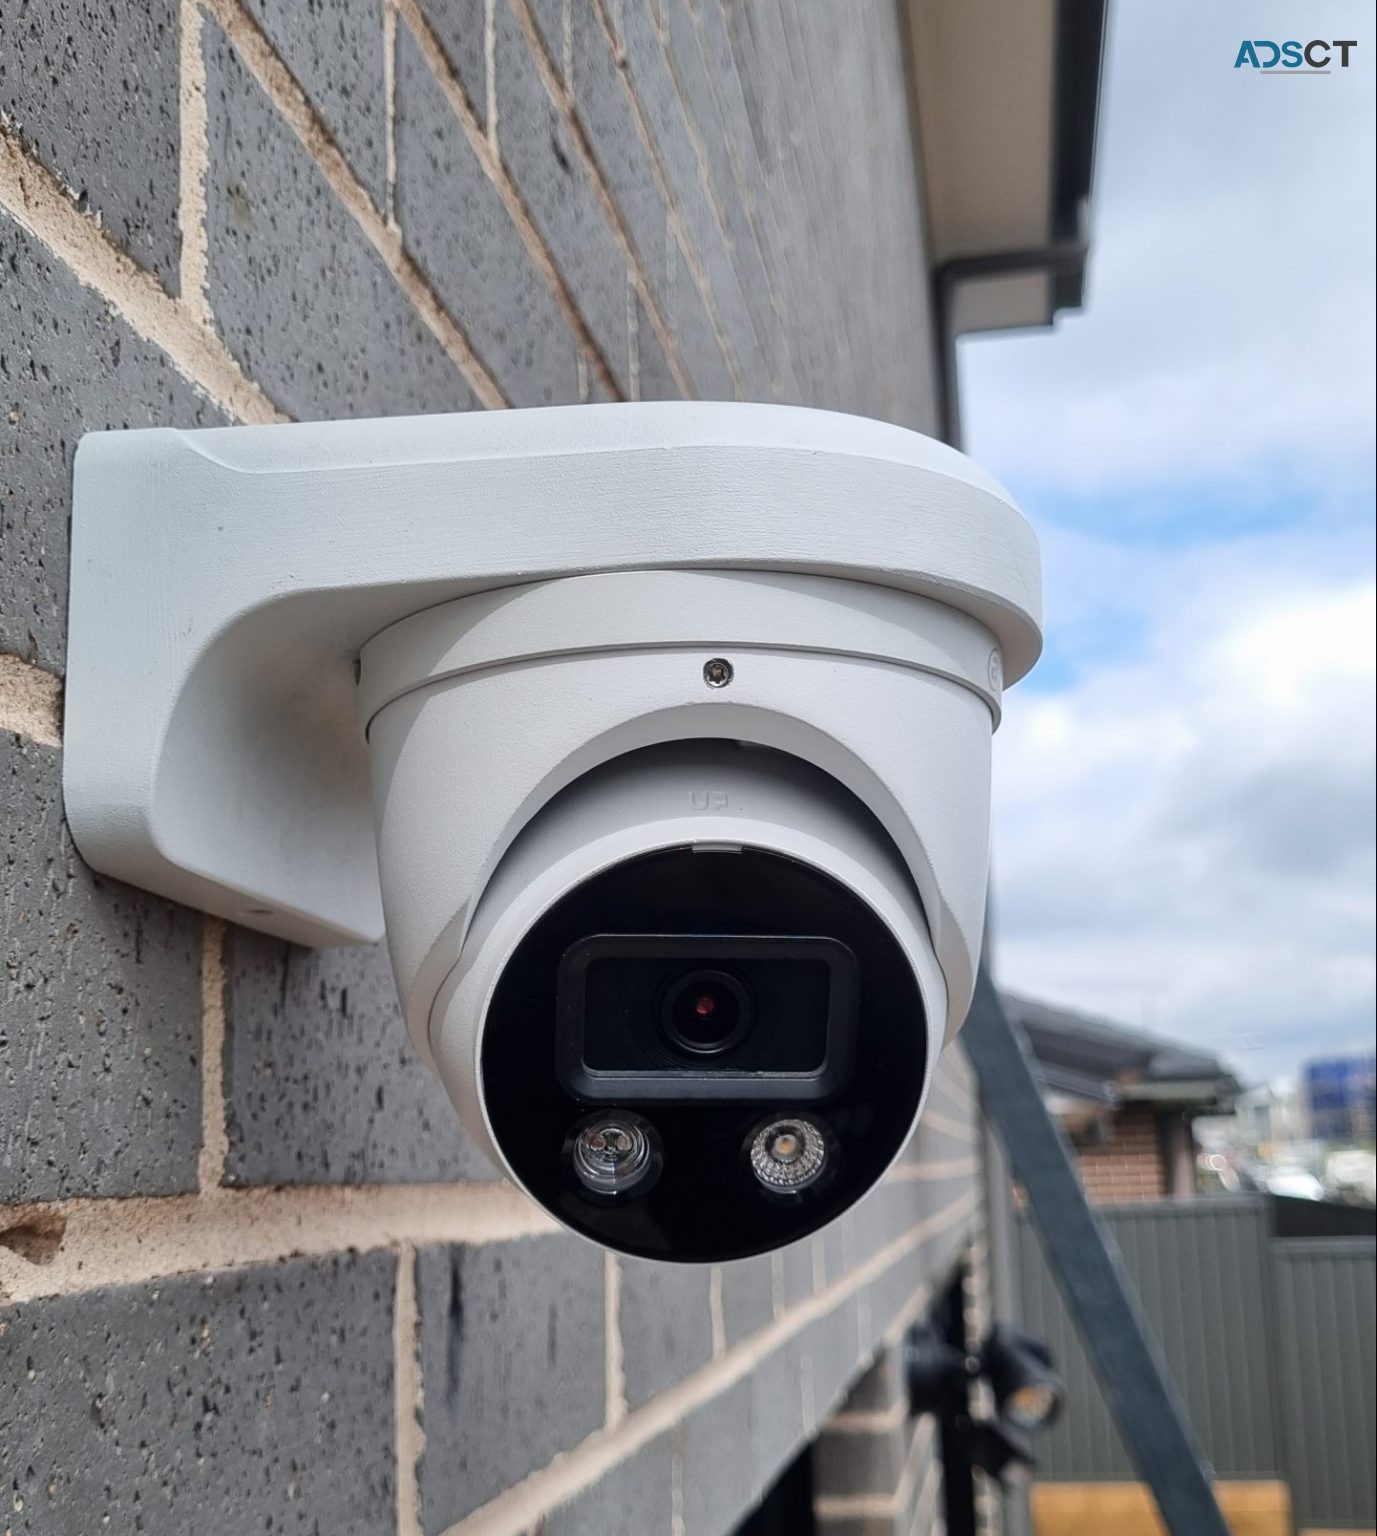 Buy The Best CCTV Security Surveillance Cameras Online in Sydney